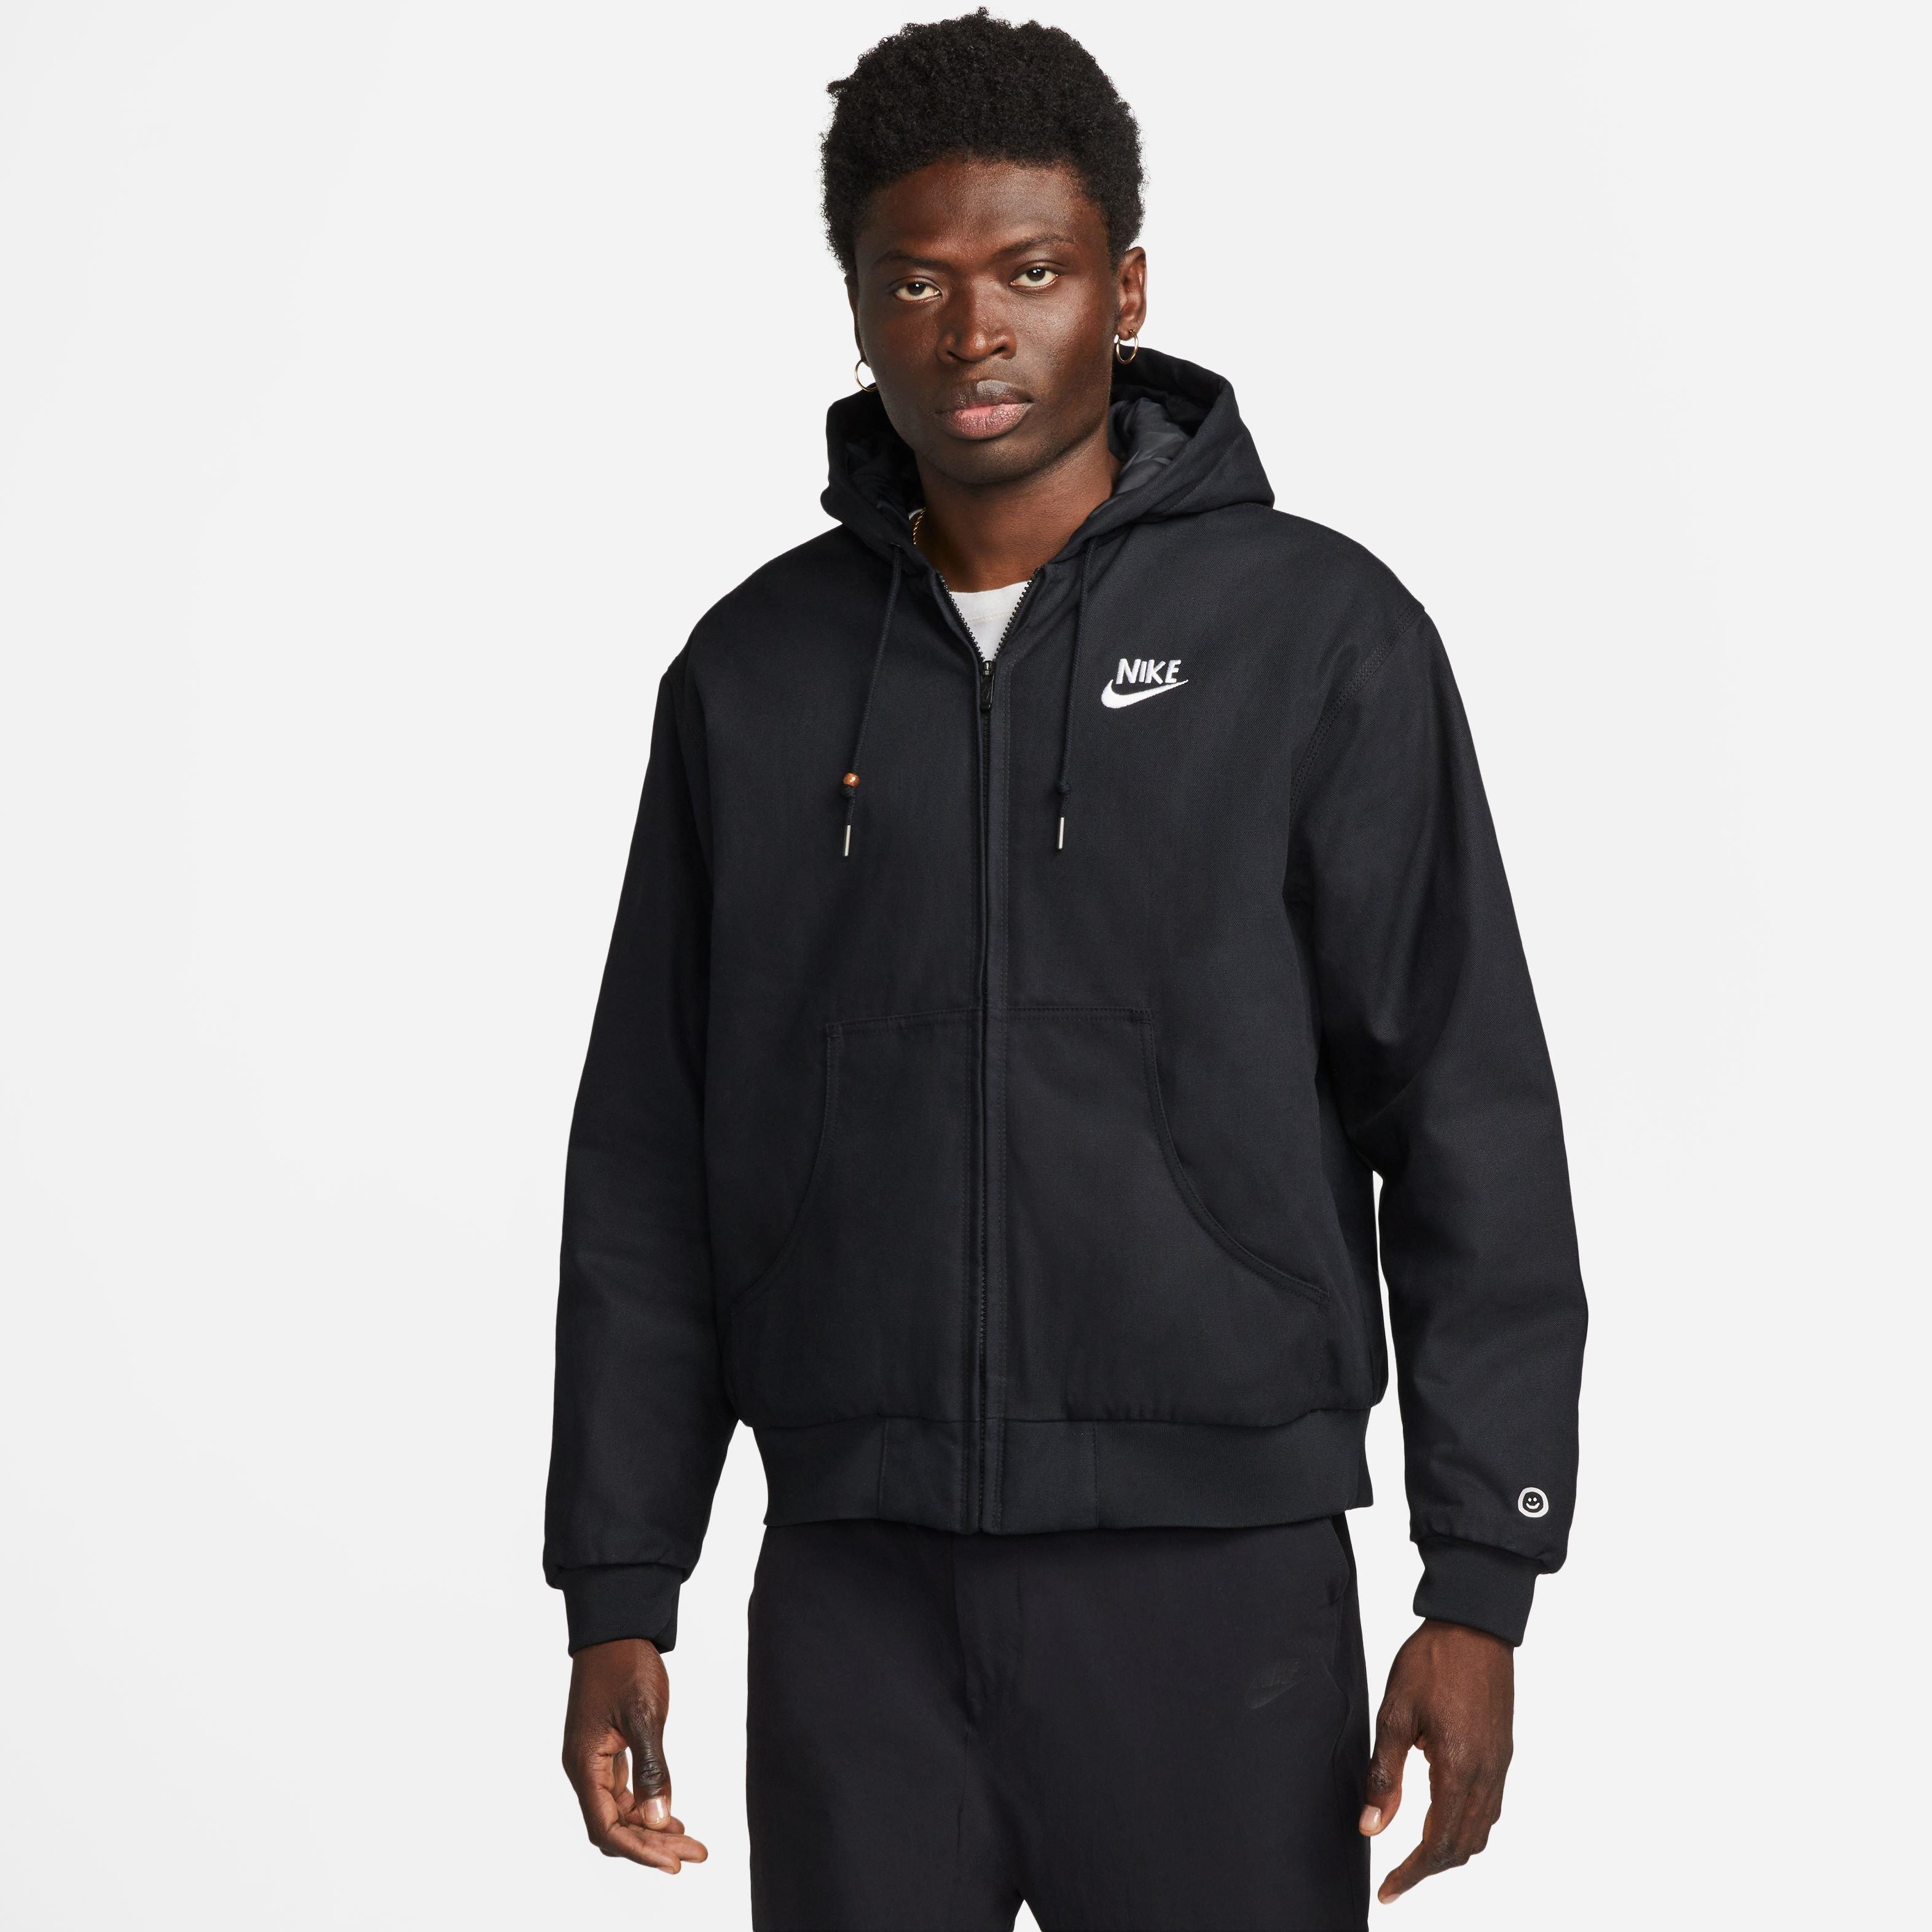 Nike Men's Sportswear Have A Nike Day Full-Zip Hooded Jacket-Black/White